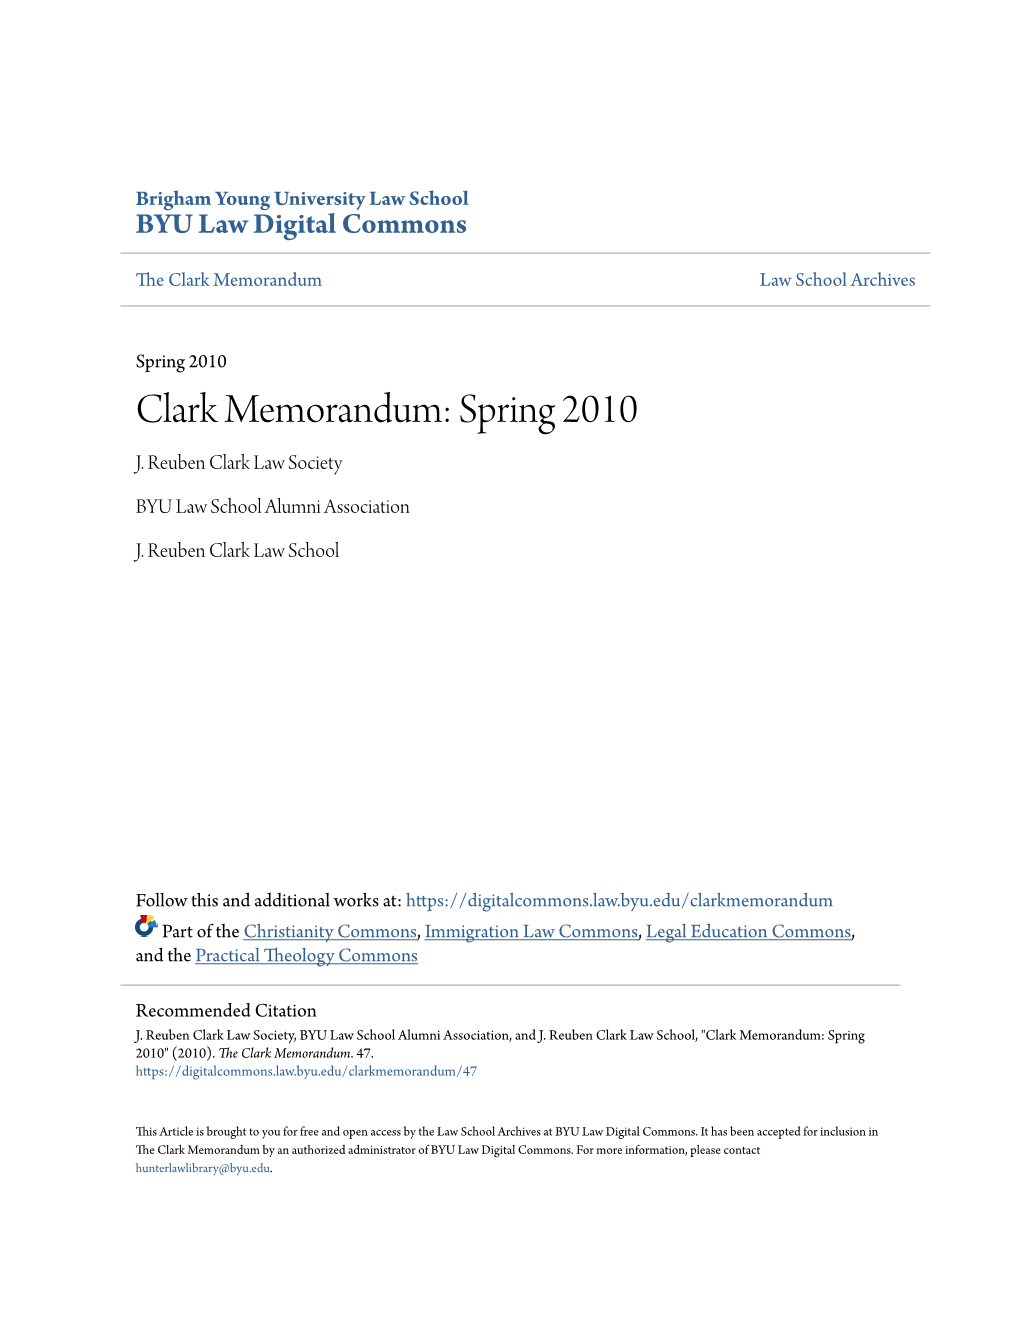 Clark Memorandum: Spring 2010 J